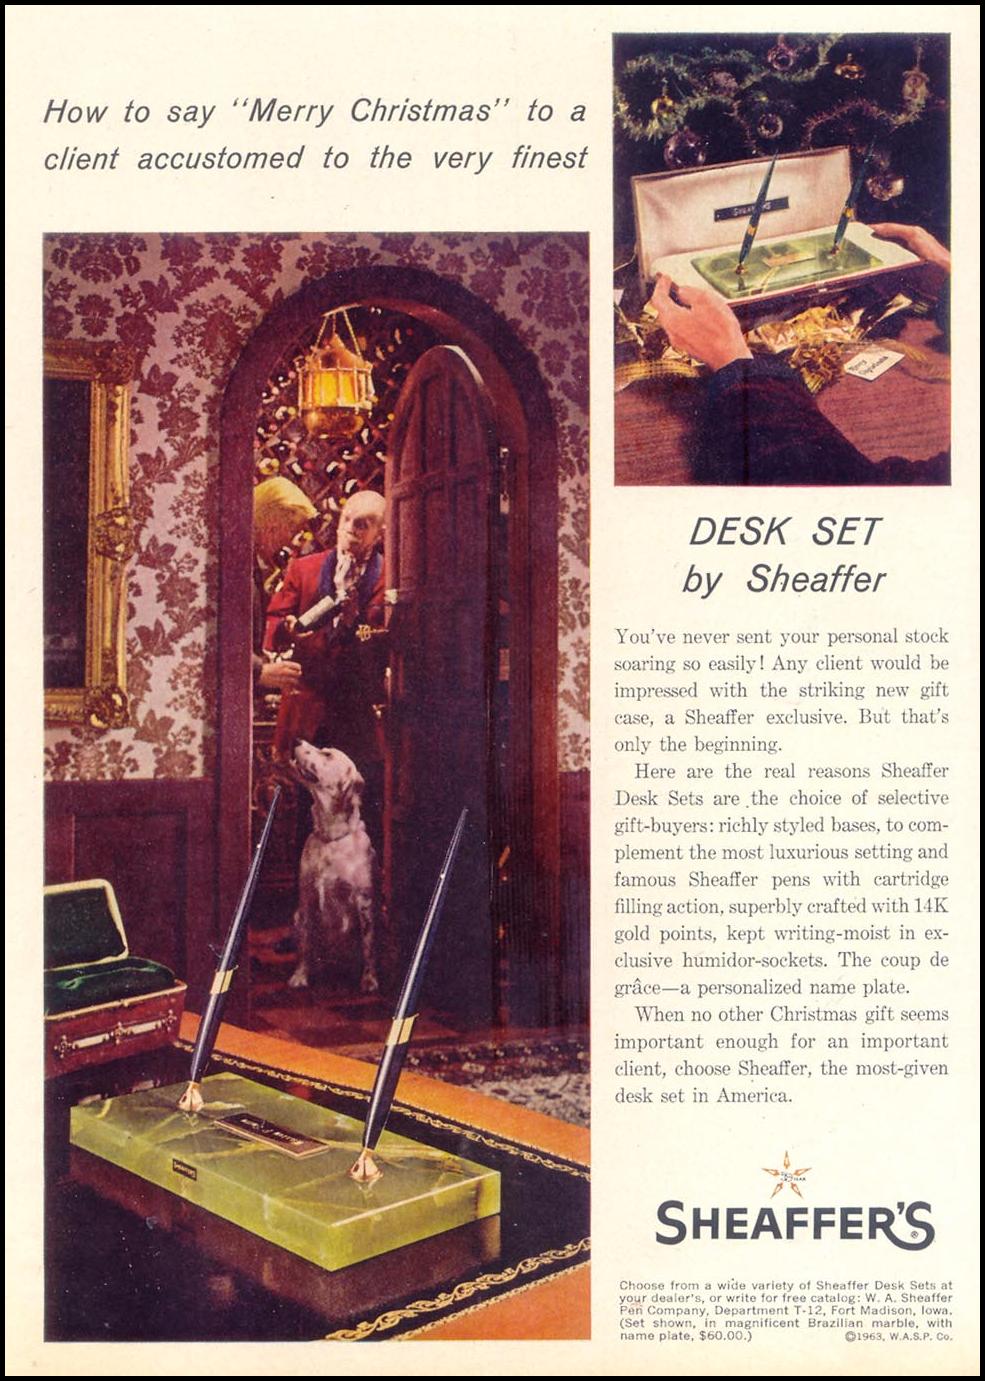 SHEAFFER'S DESK SET
TIME
12/06/1963
p. 12